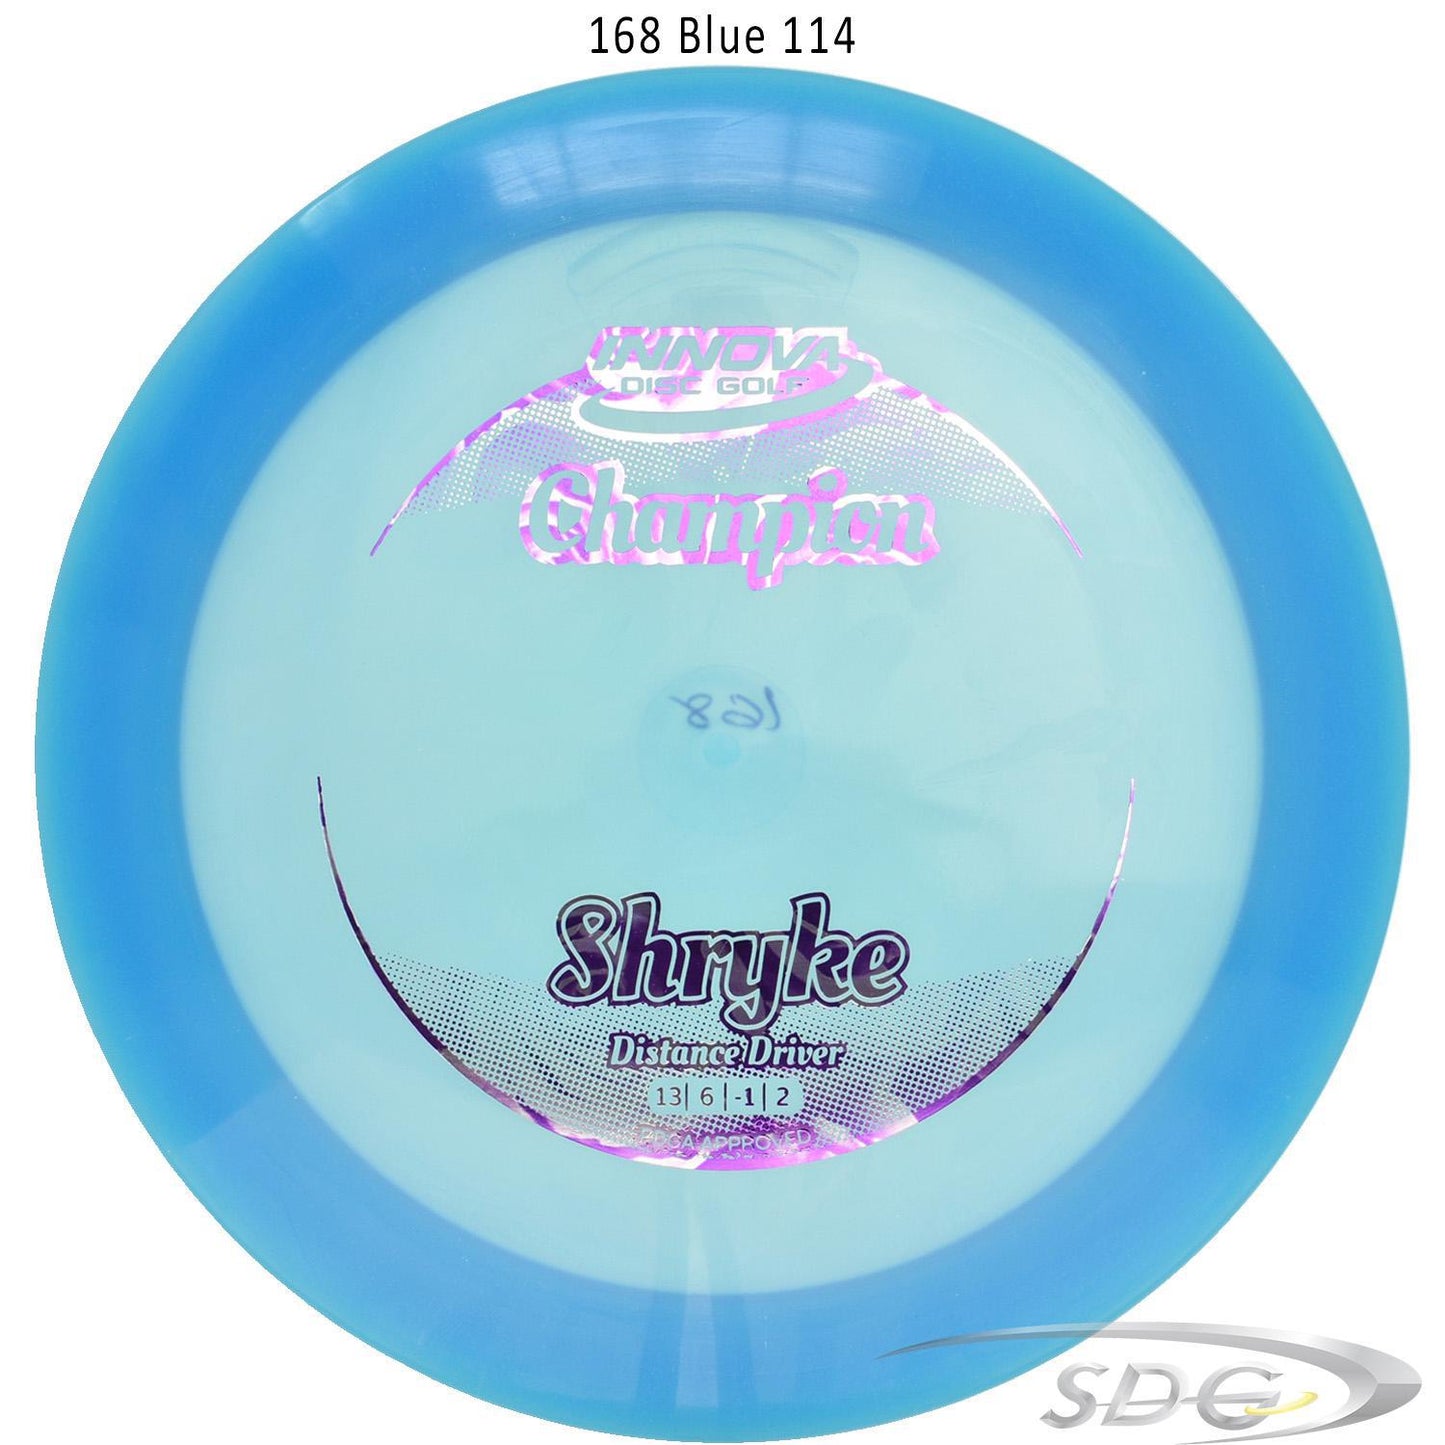 innova-champion-shryke-disc-golf-distance-driver 168 Blue 114 